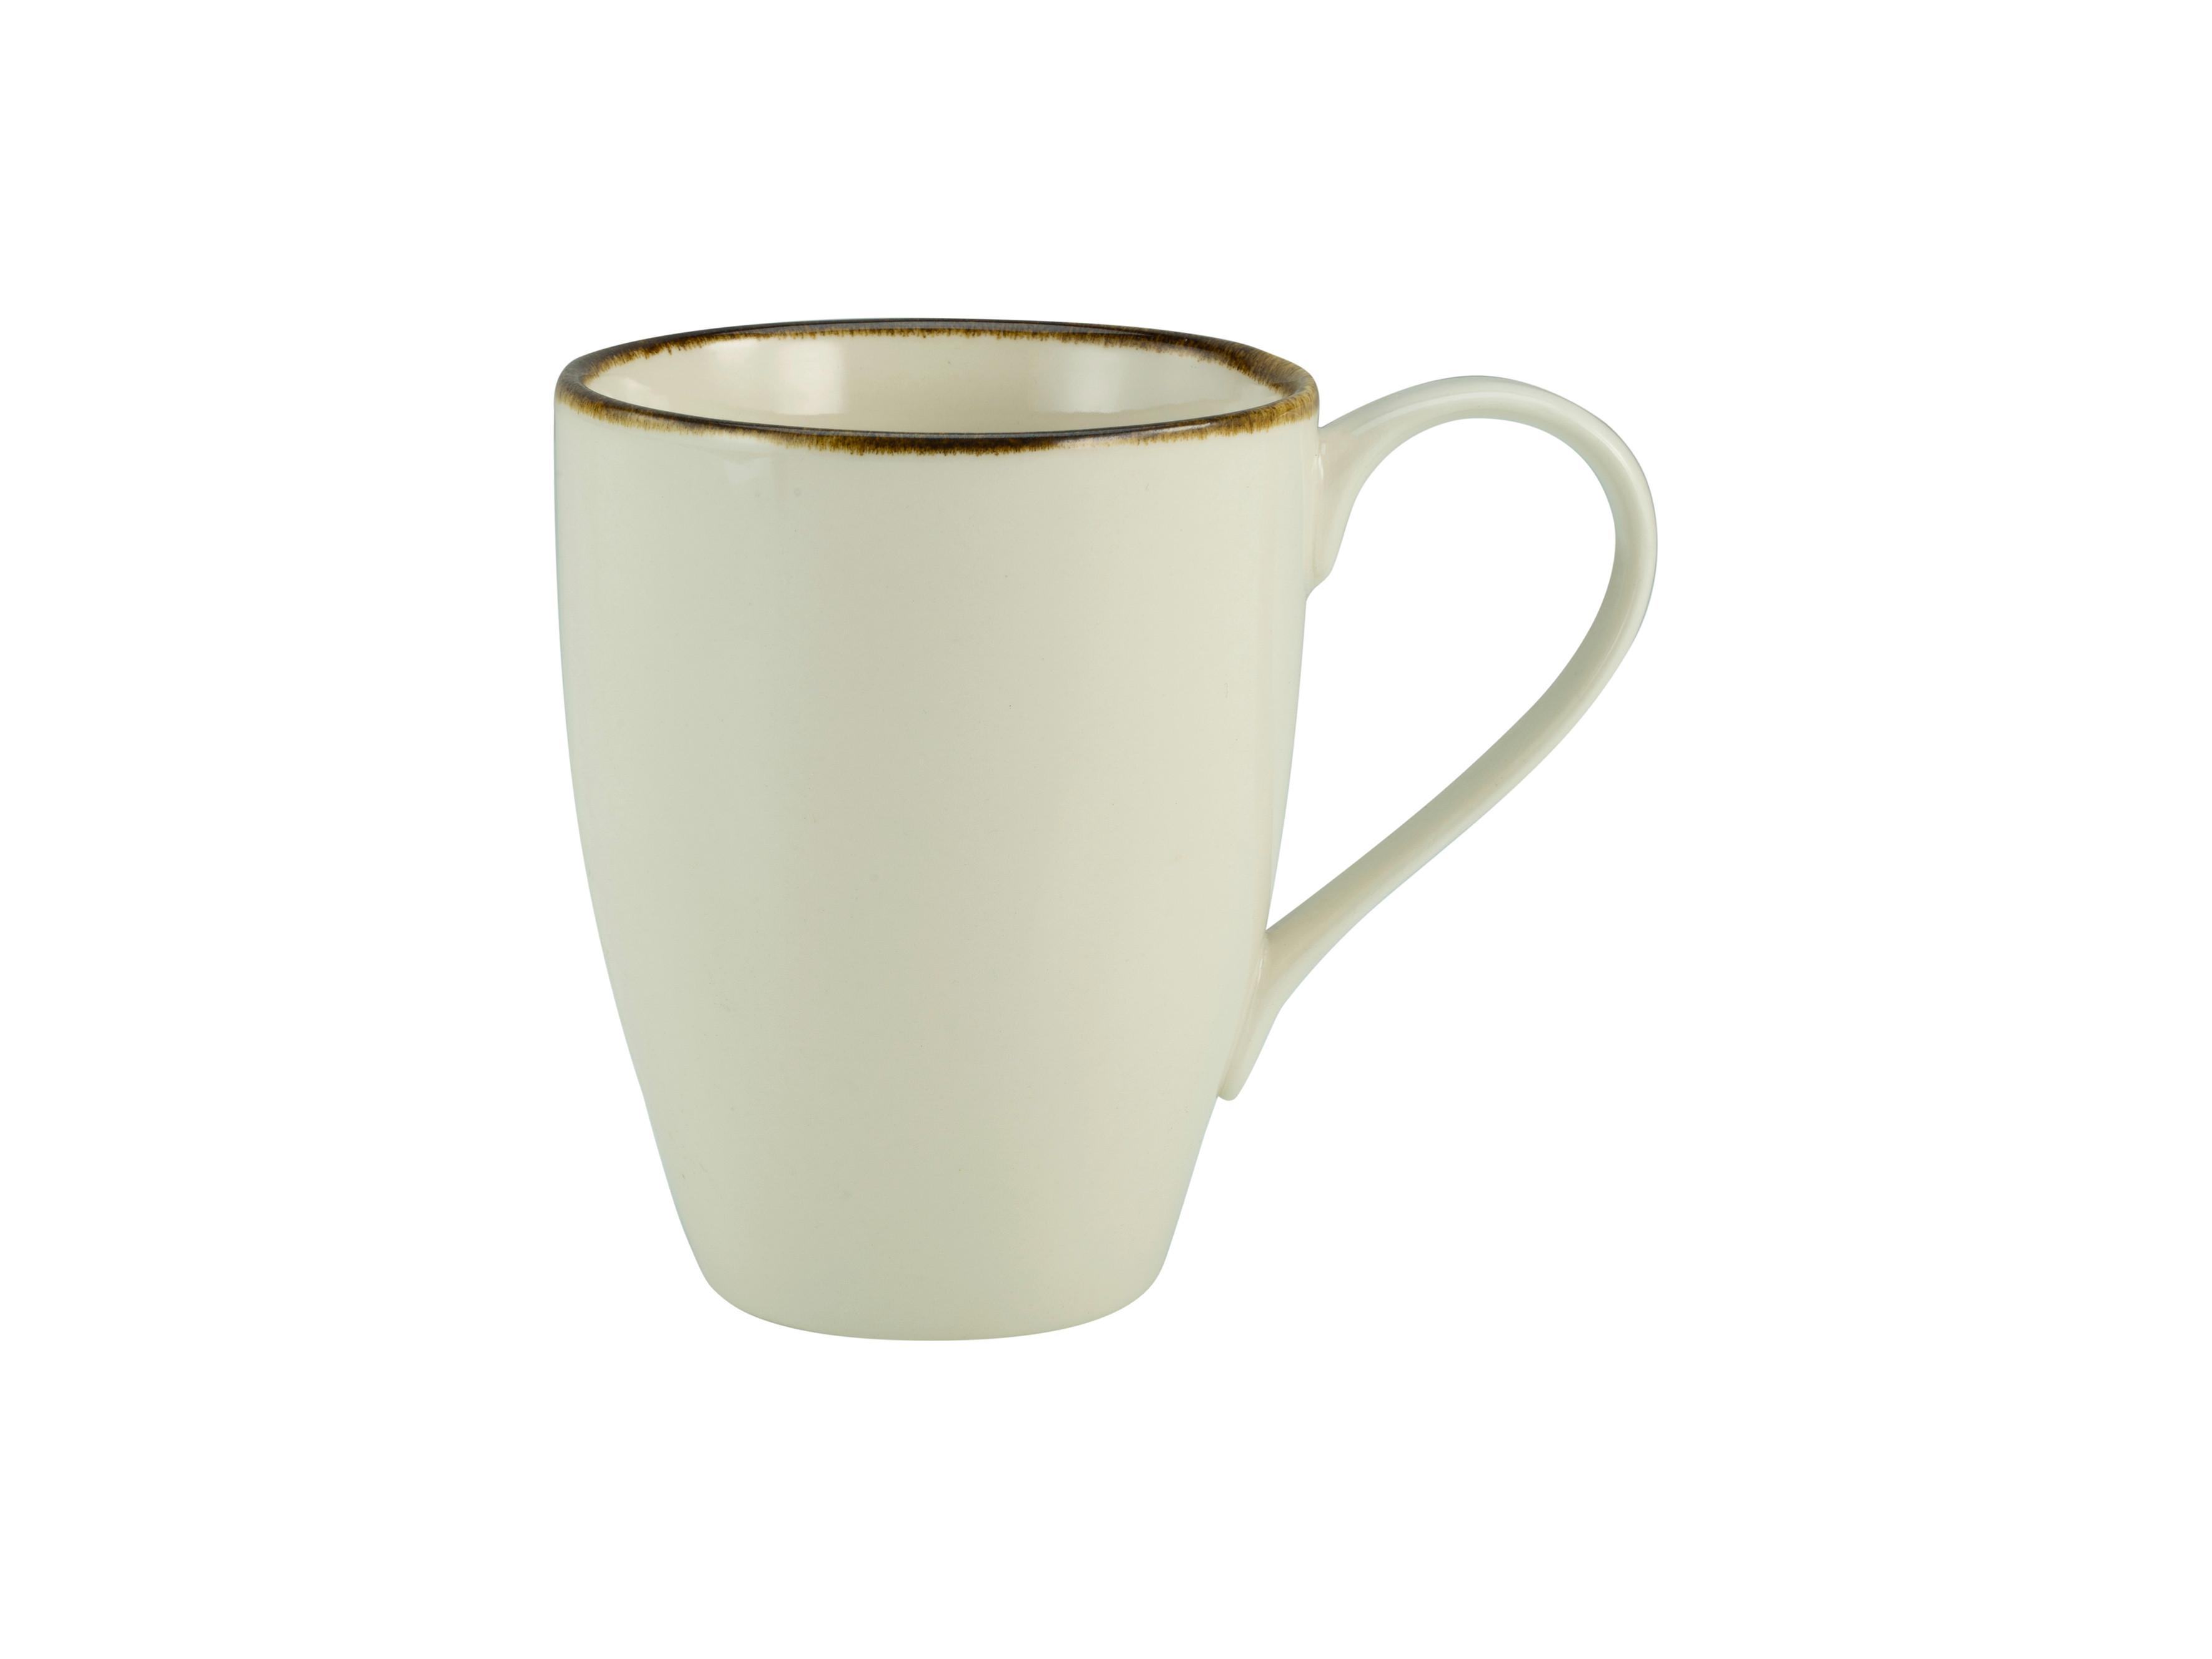 Lonček Za Kavo Linen - krem barve/bela, keramika (13/9/11cm) - Premium Living